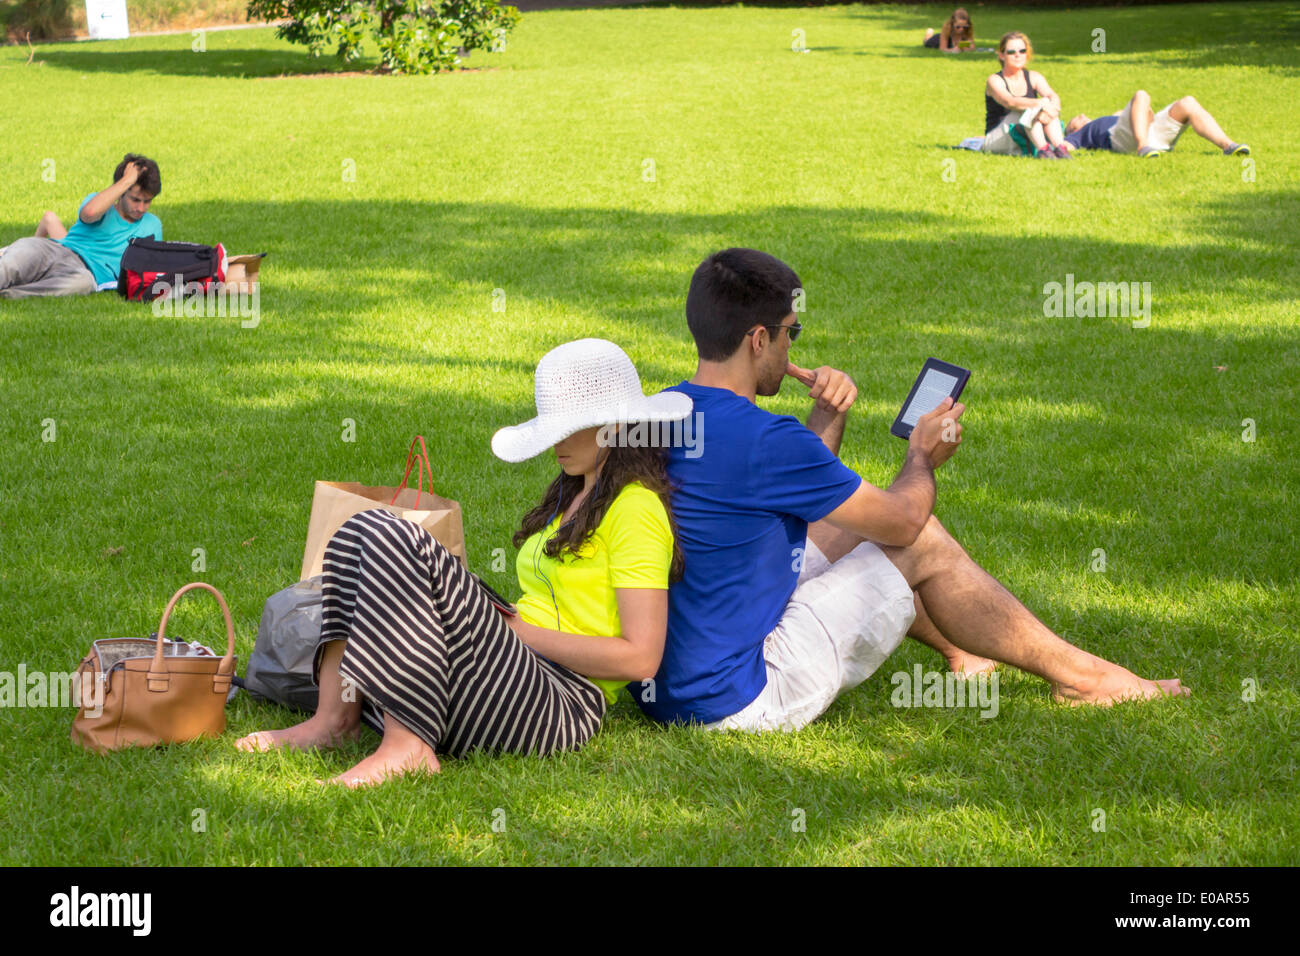 Sydney Australia,Royal Botanic Gardens,man men male,woman female women,couple,back to back,lawn,sitting,using,tablet,park,AU140309174 Stock Photo